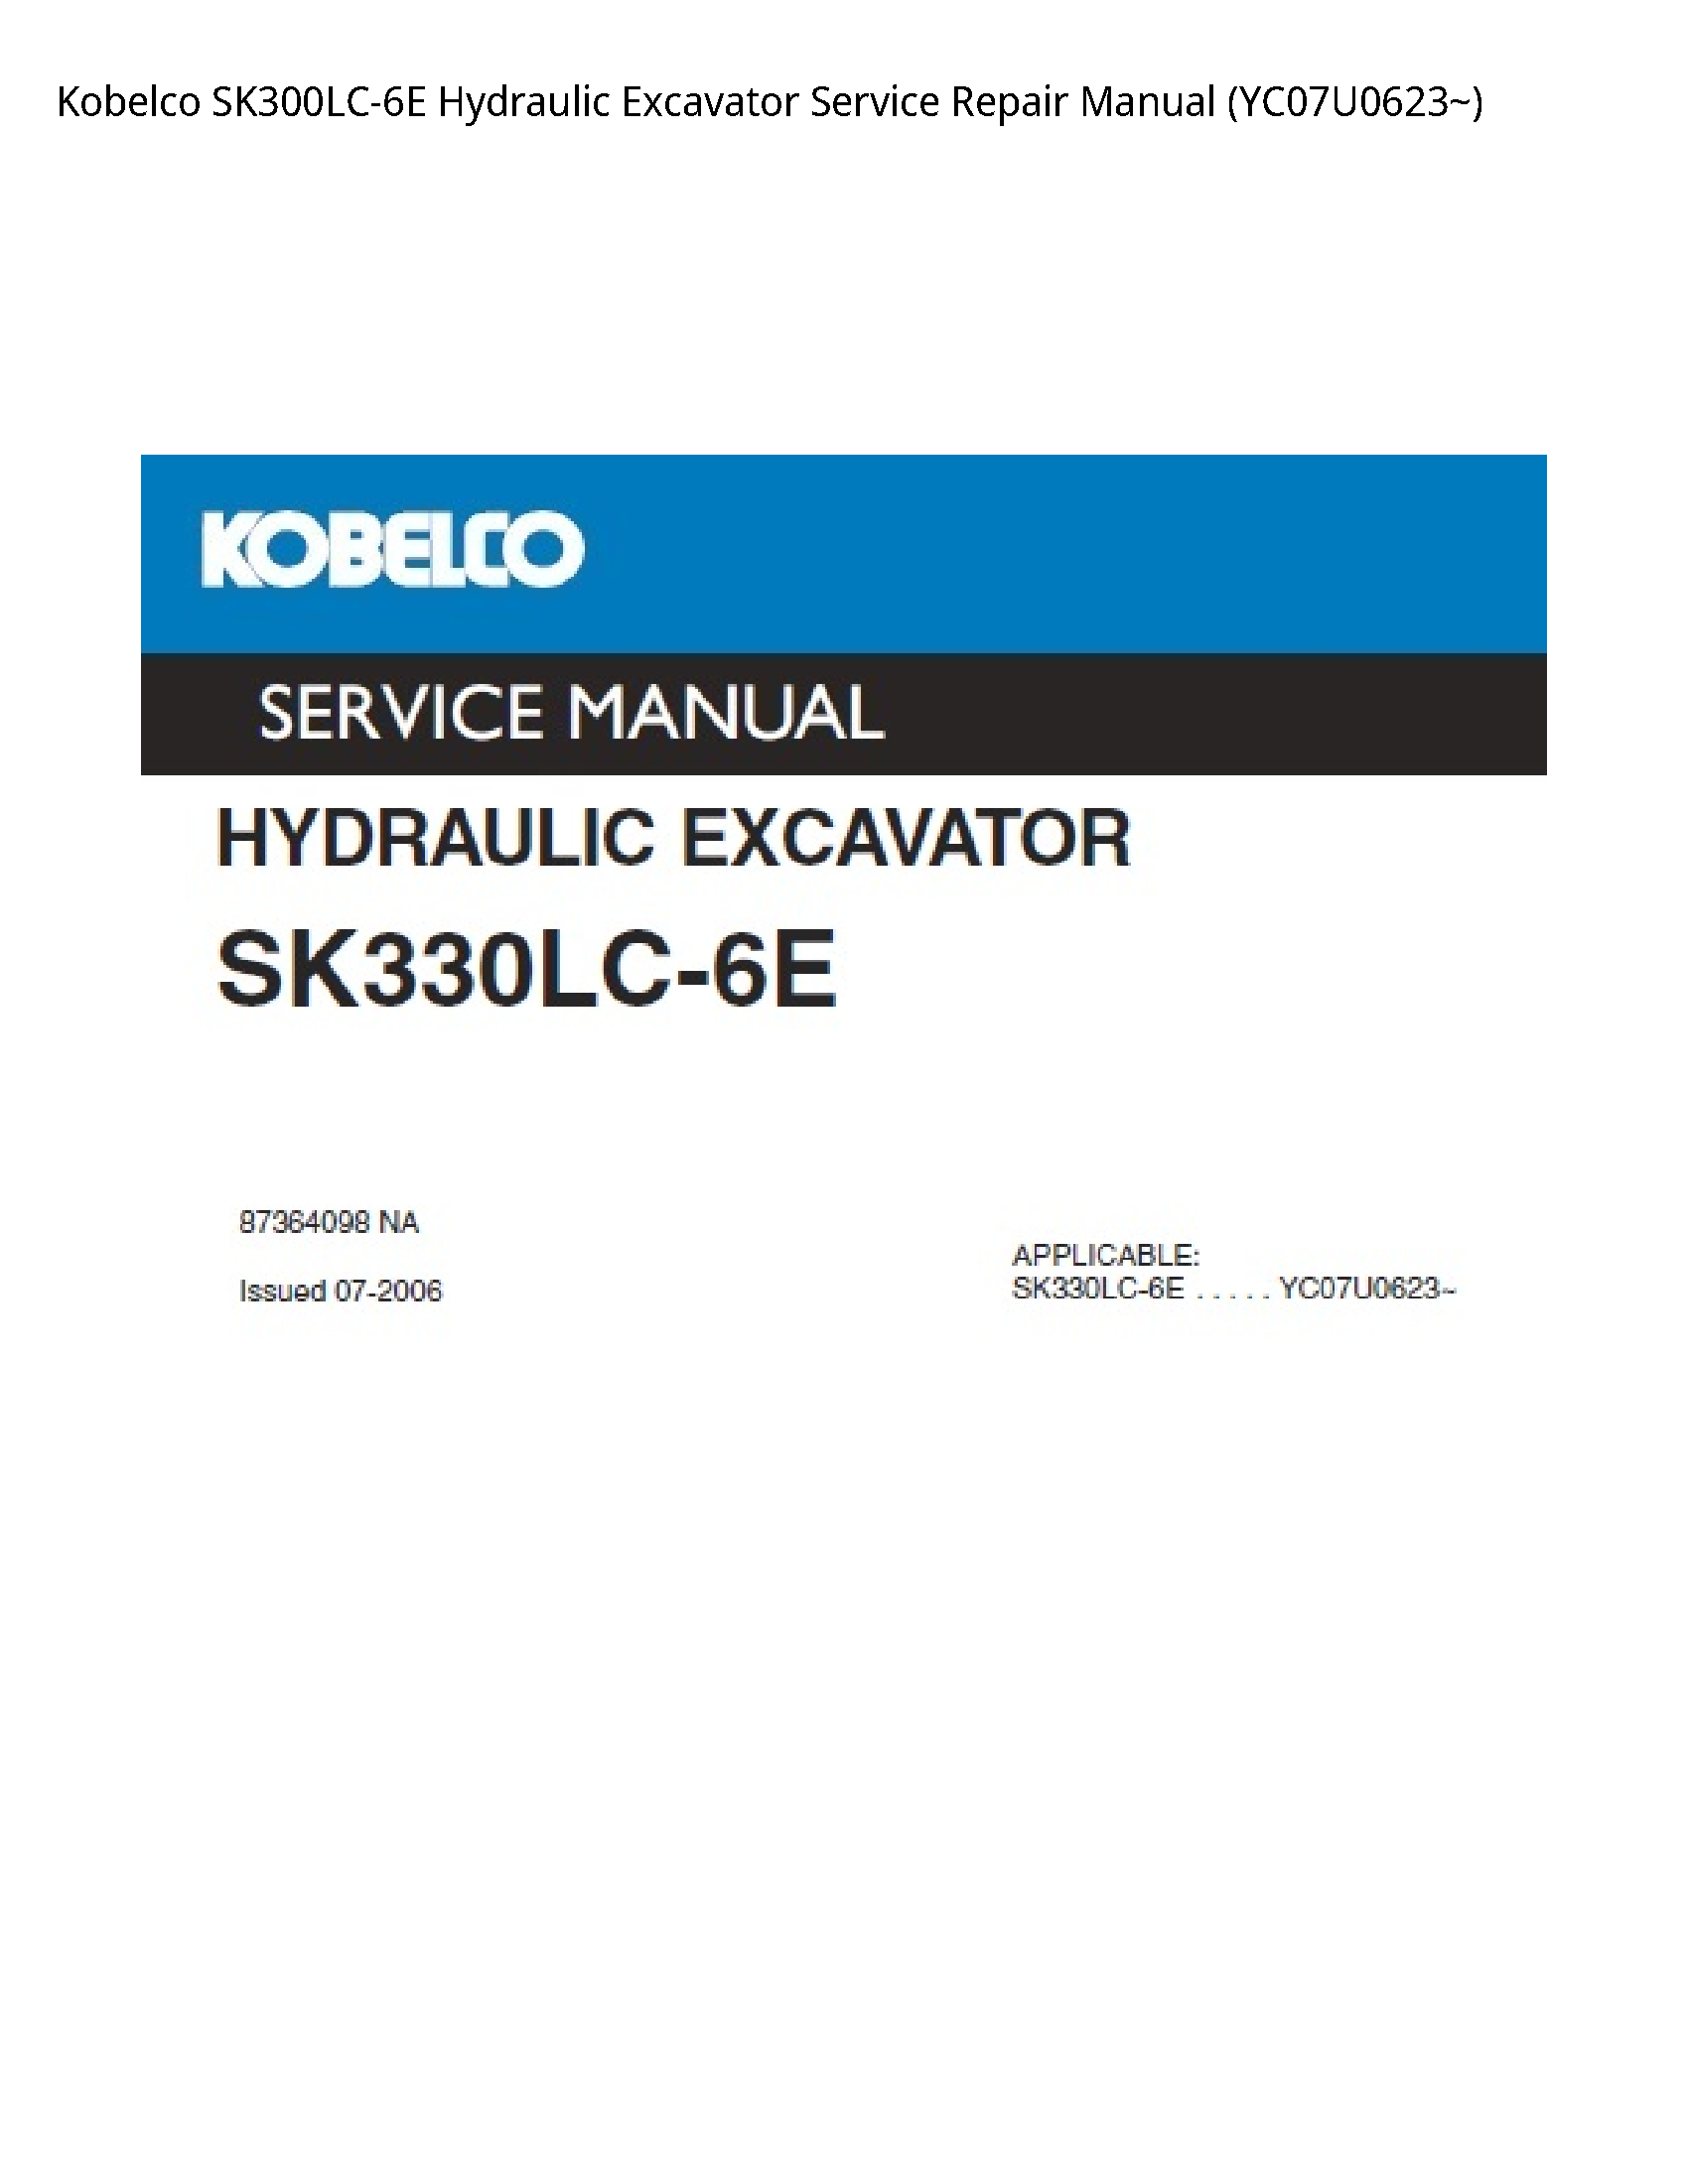 Kobelco SK300LC-6E Hydraulic Excavator manual